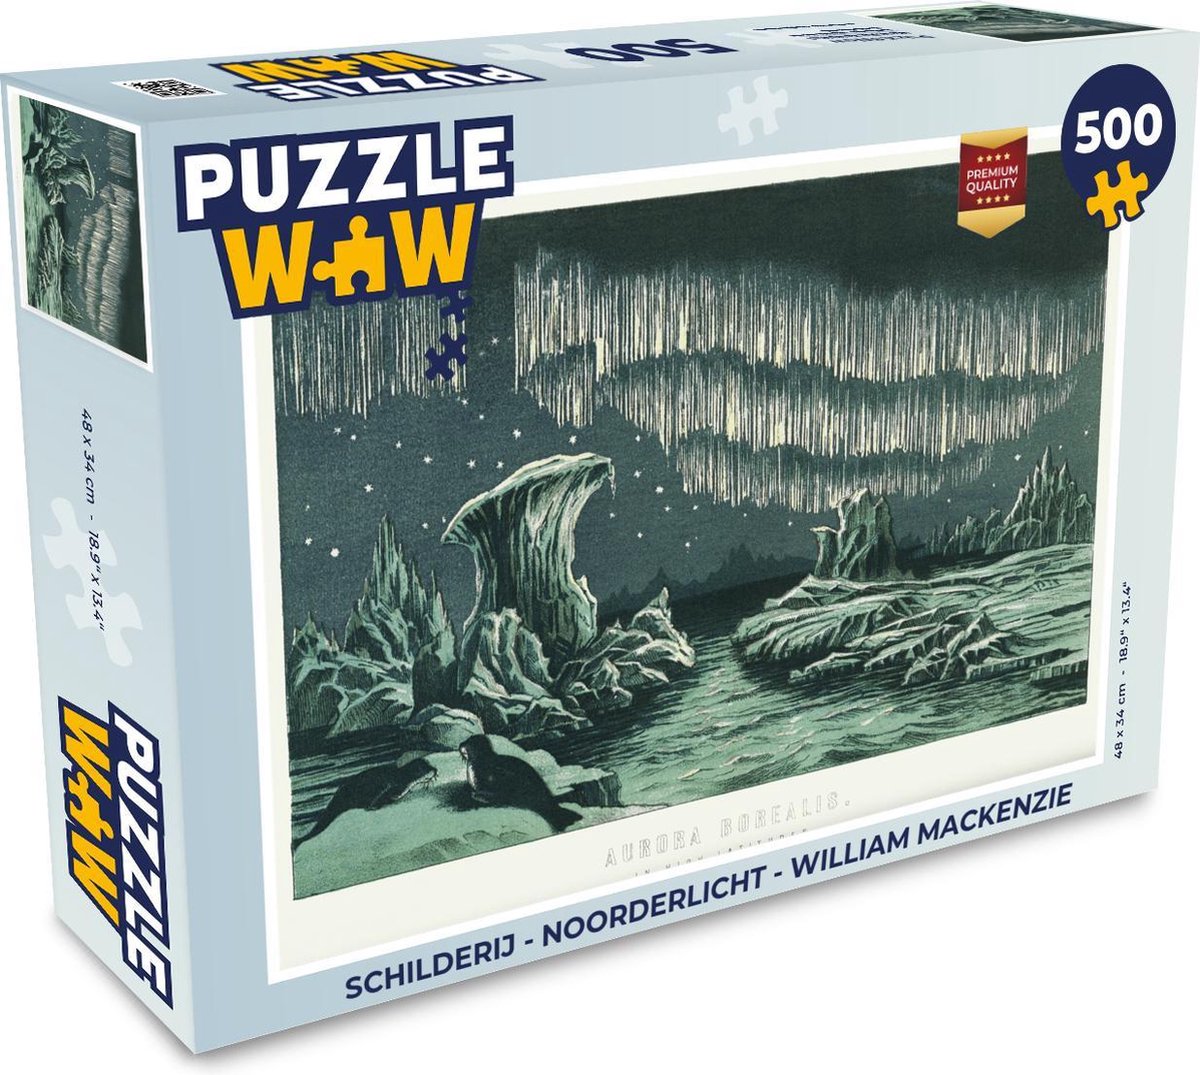 Afbeelding van product PuzzleWow  Puzzel Schilderij - Noorderlicht - William Mackenzie - Legpuzzel - Puzzel 500 stukjes